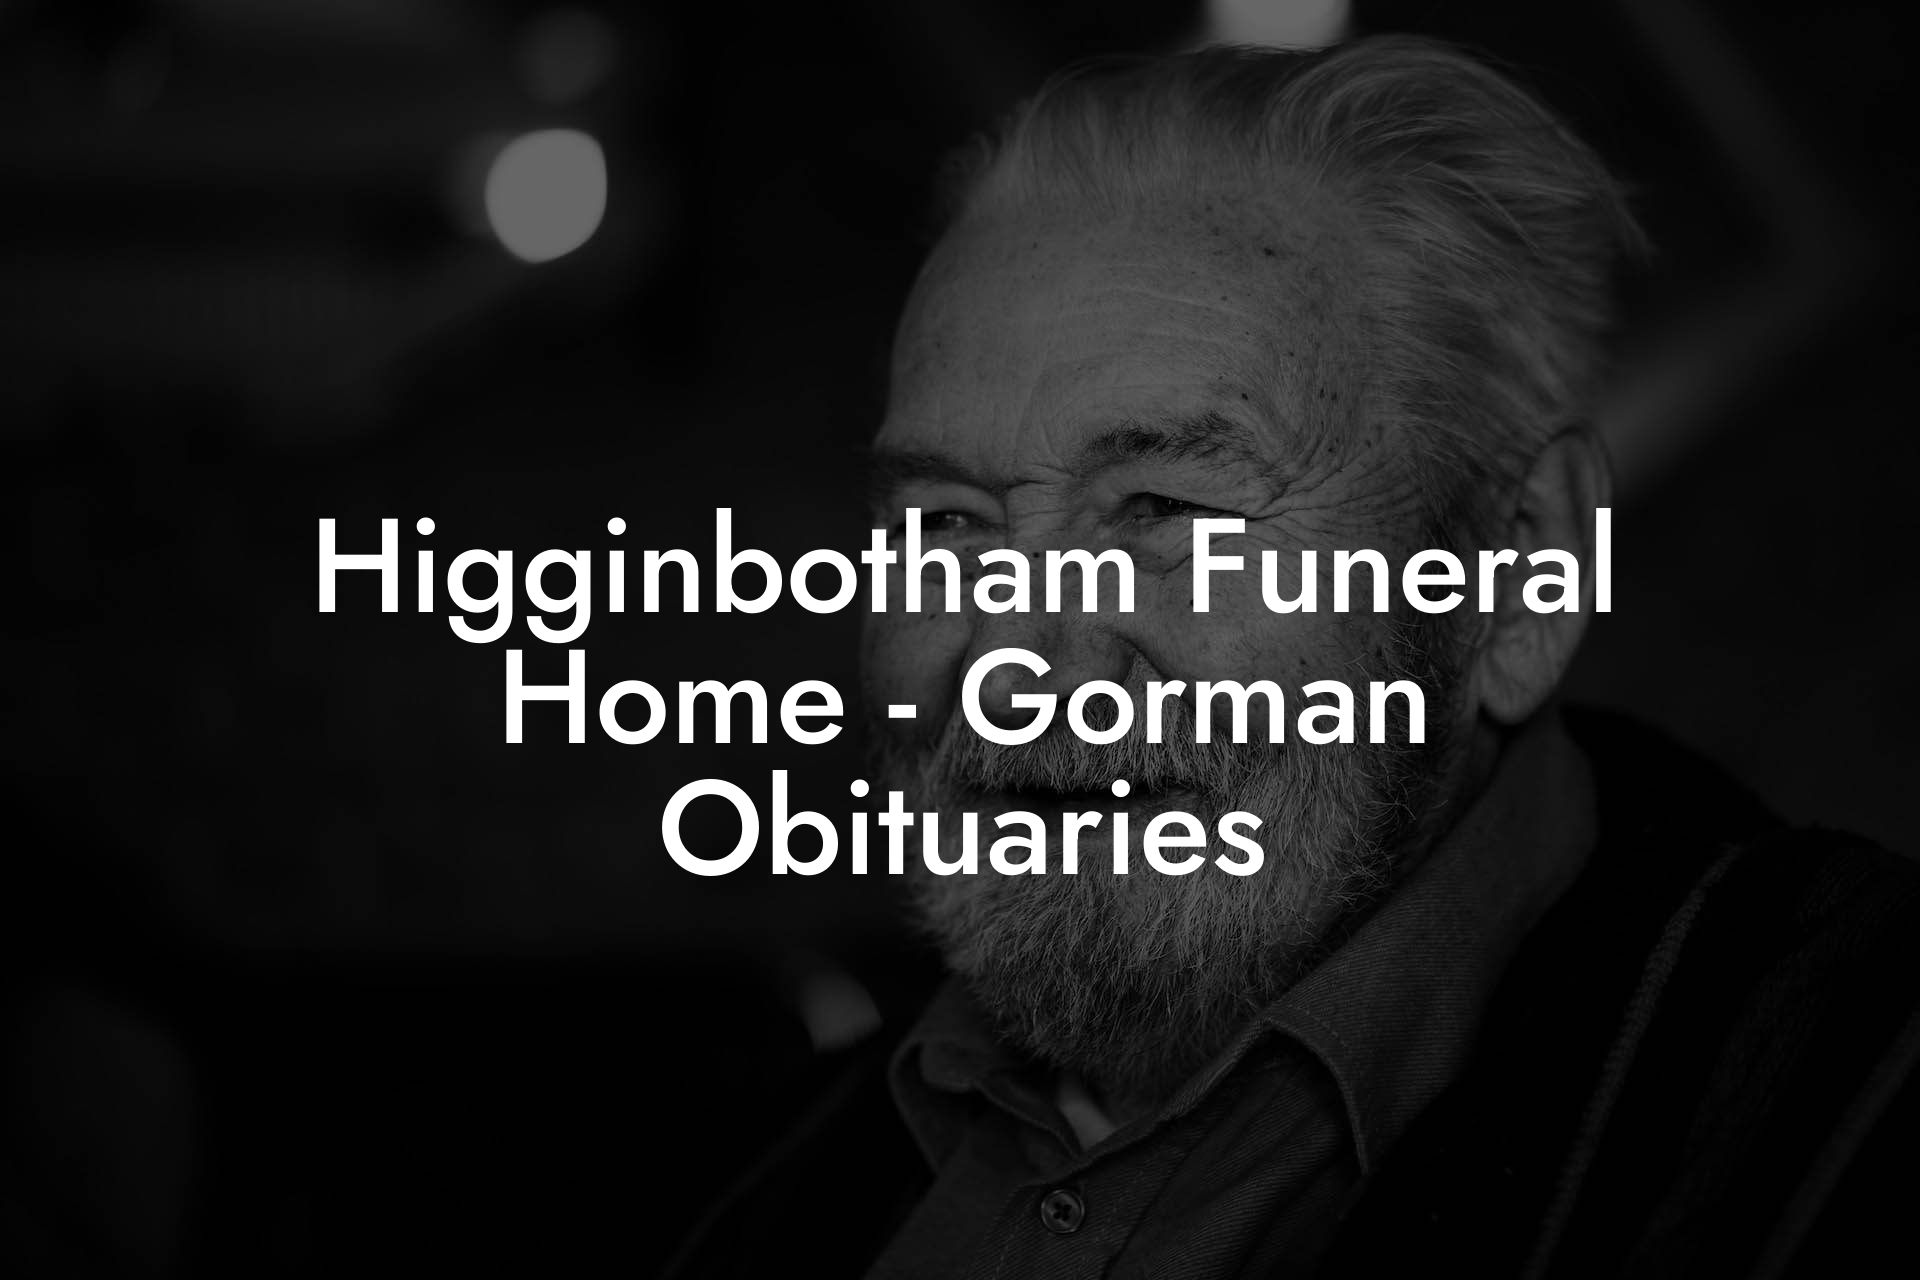 Higginbotham Funeral Home - Gorman Obituaries